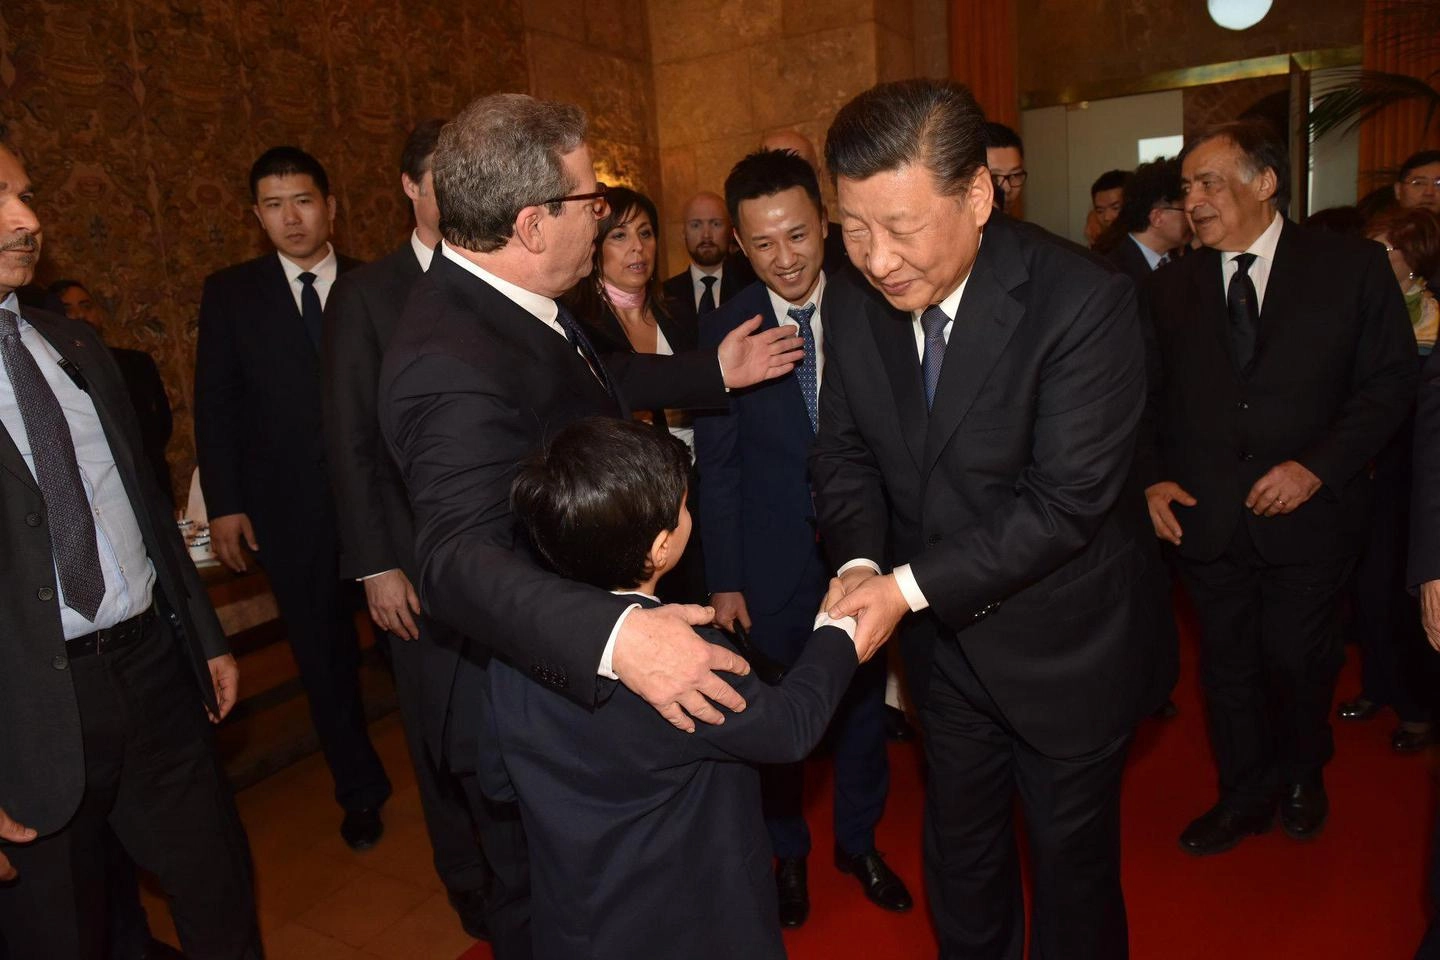 Il presidente Xi Jinping stringe la mano al puparo Antonio Tancredi Cadili (Ansa)